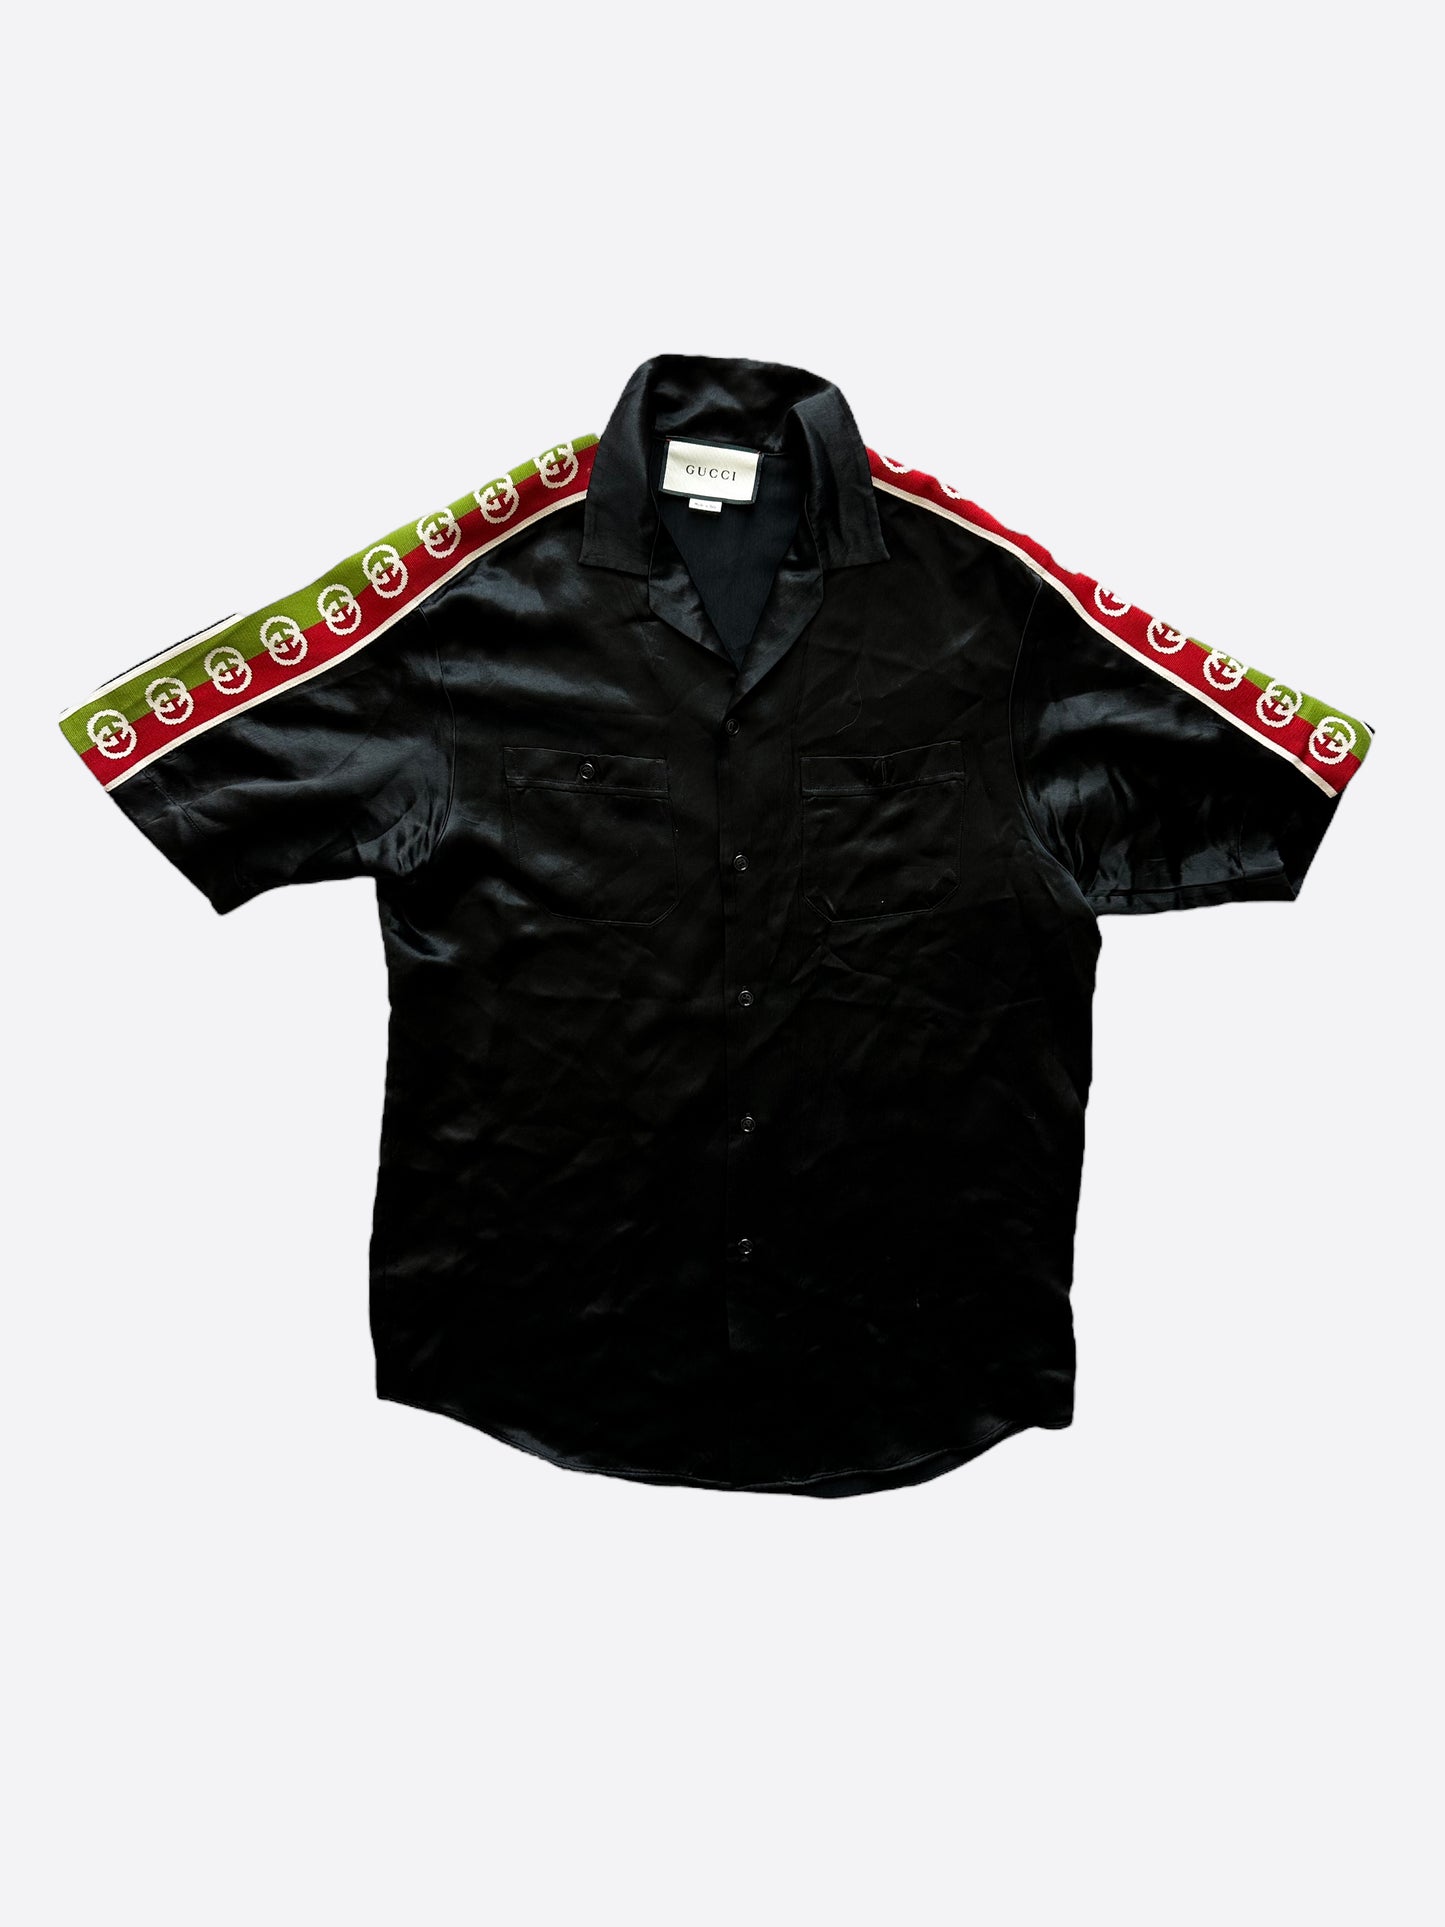 Gucci Black GG Monogram Striped Button Up Shirt